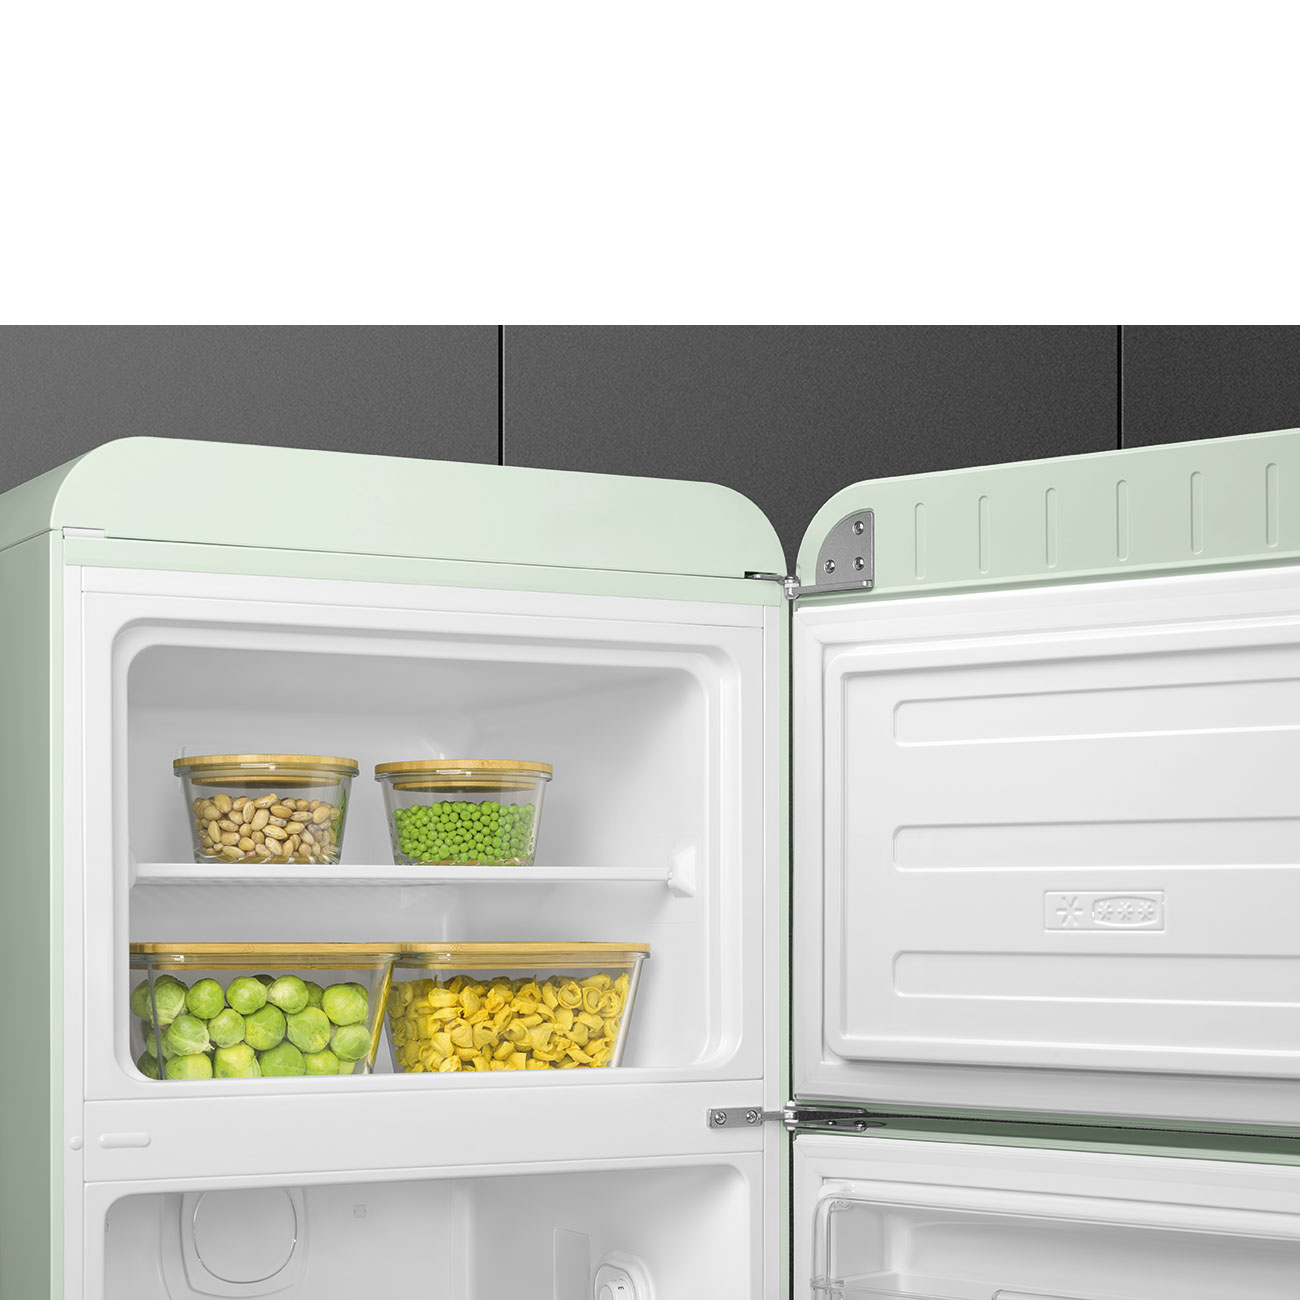 Pastel green refrigerator - Smeg_5